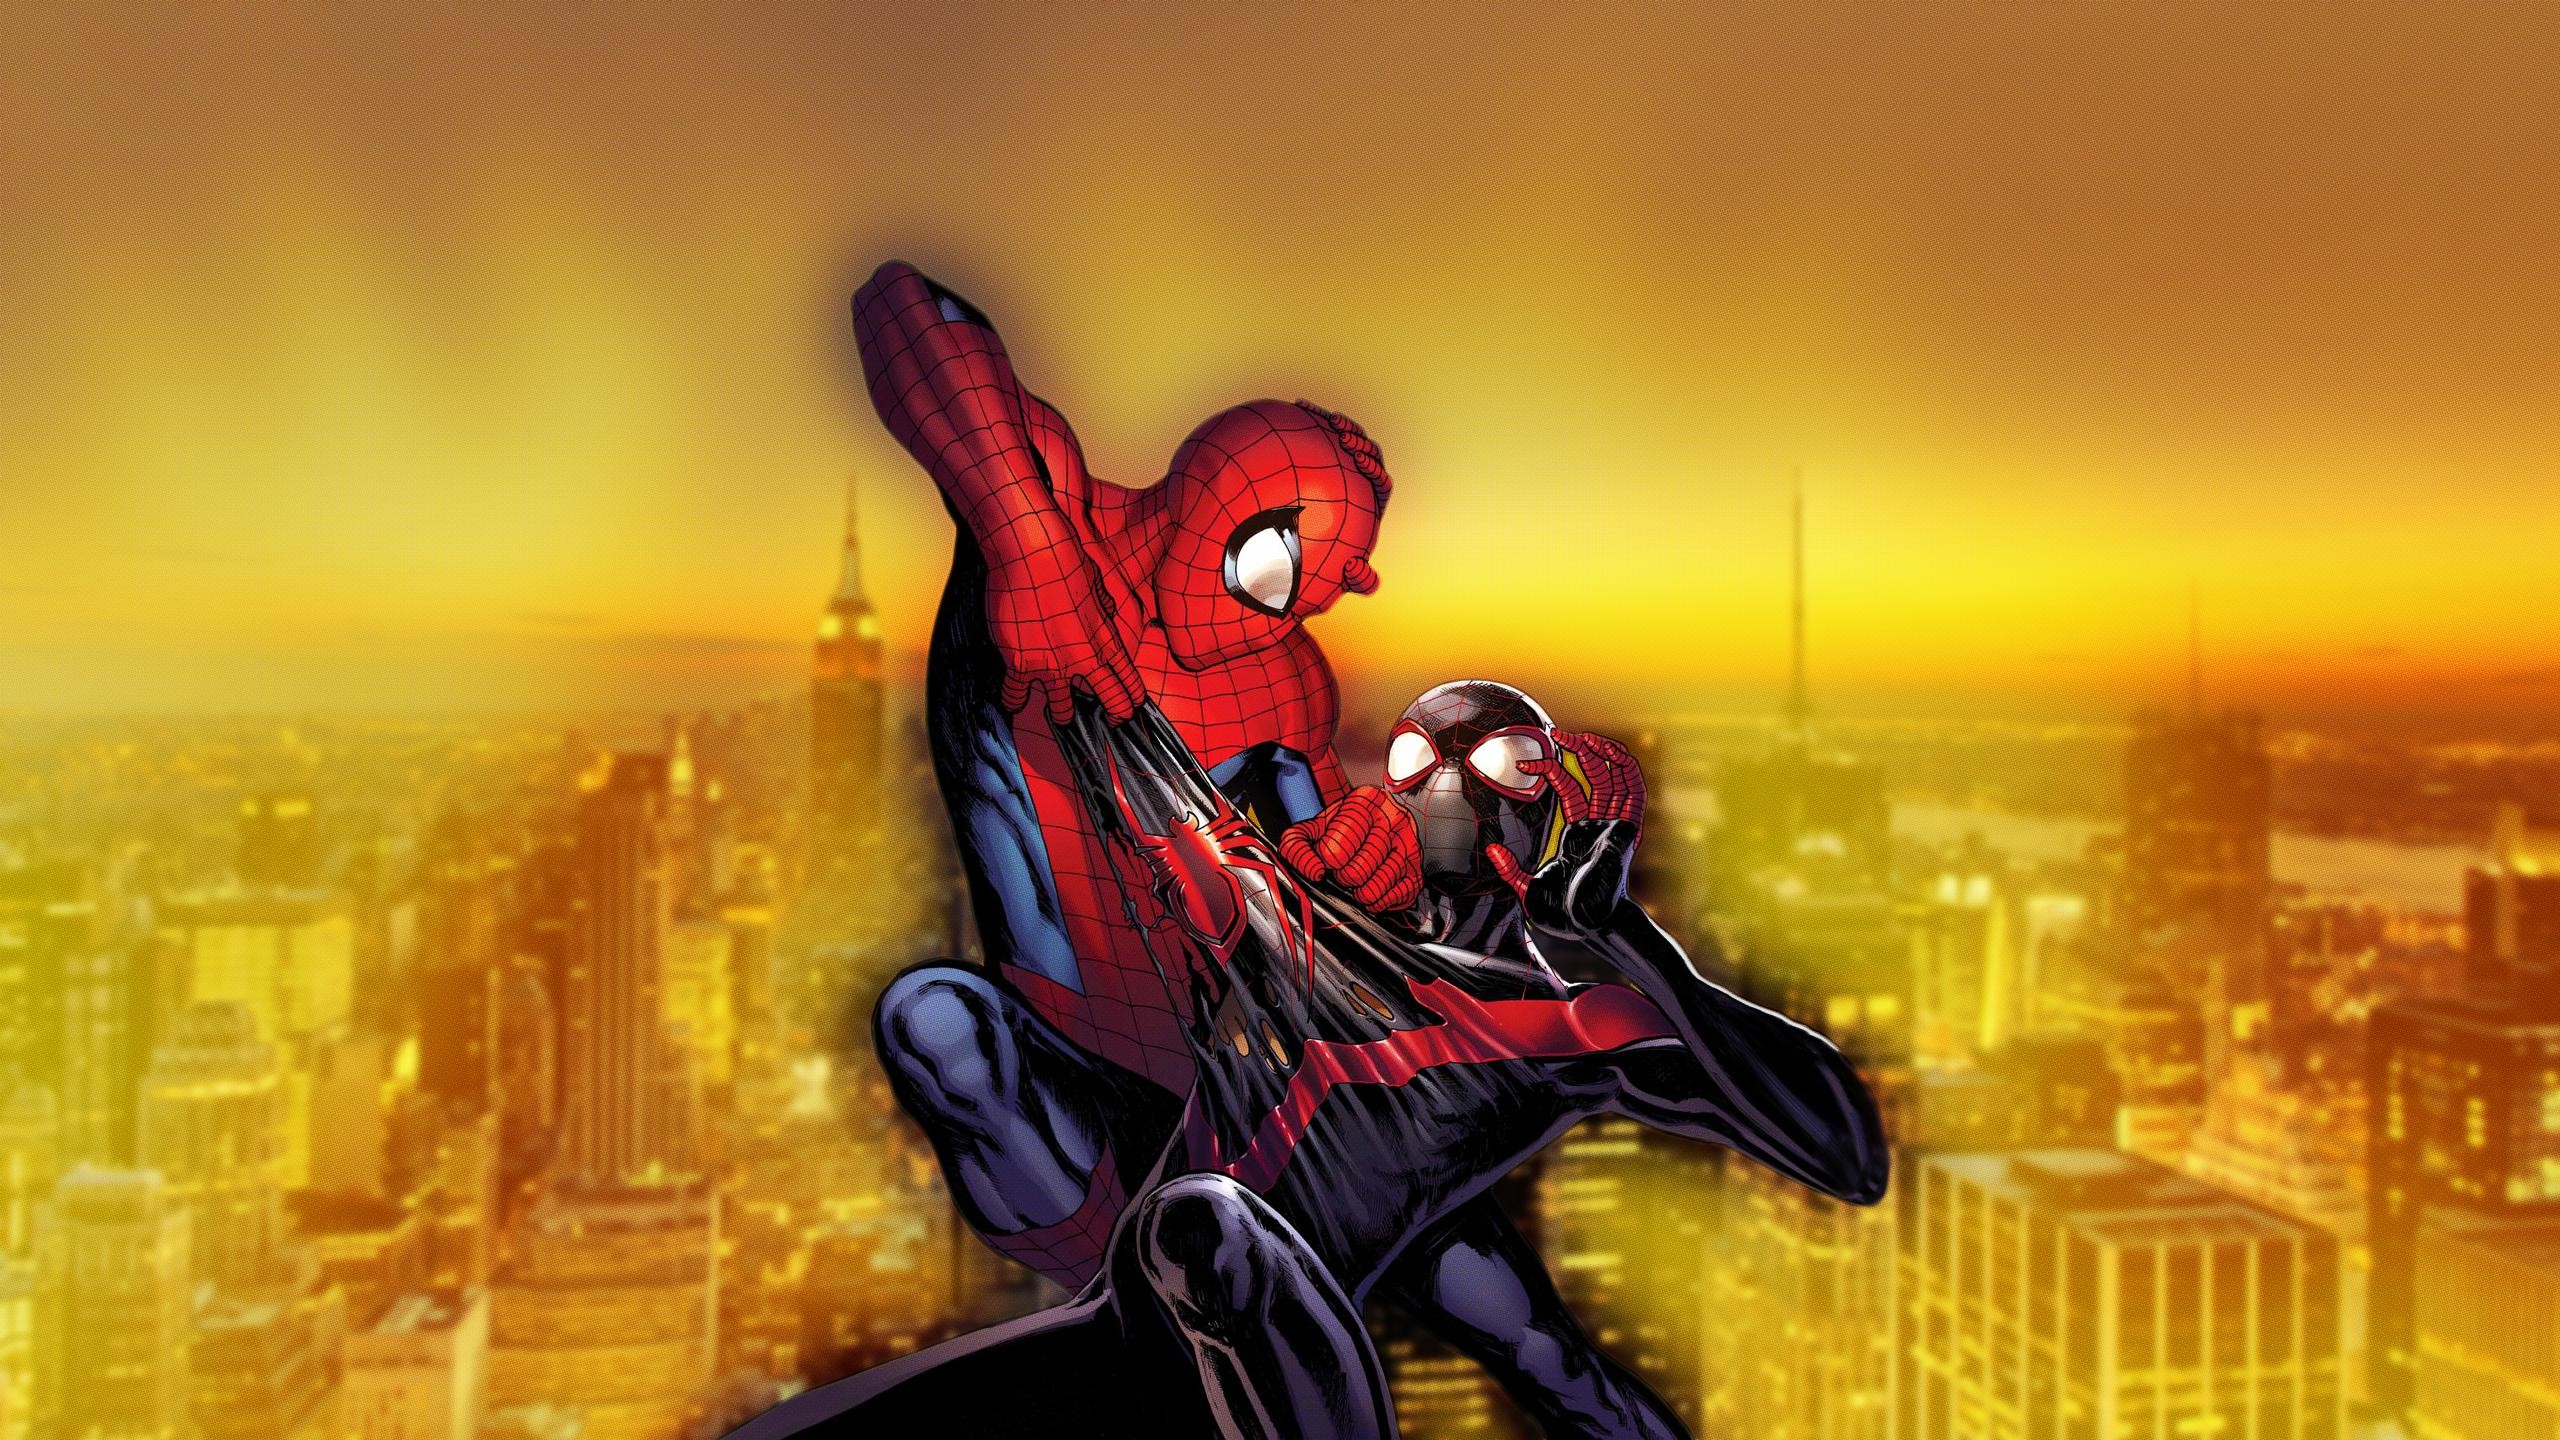 2560x1440 [1440p] Spiderman & Spiderman Wallpaper ...